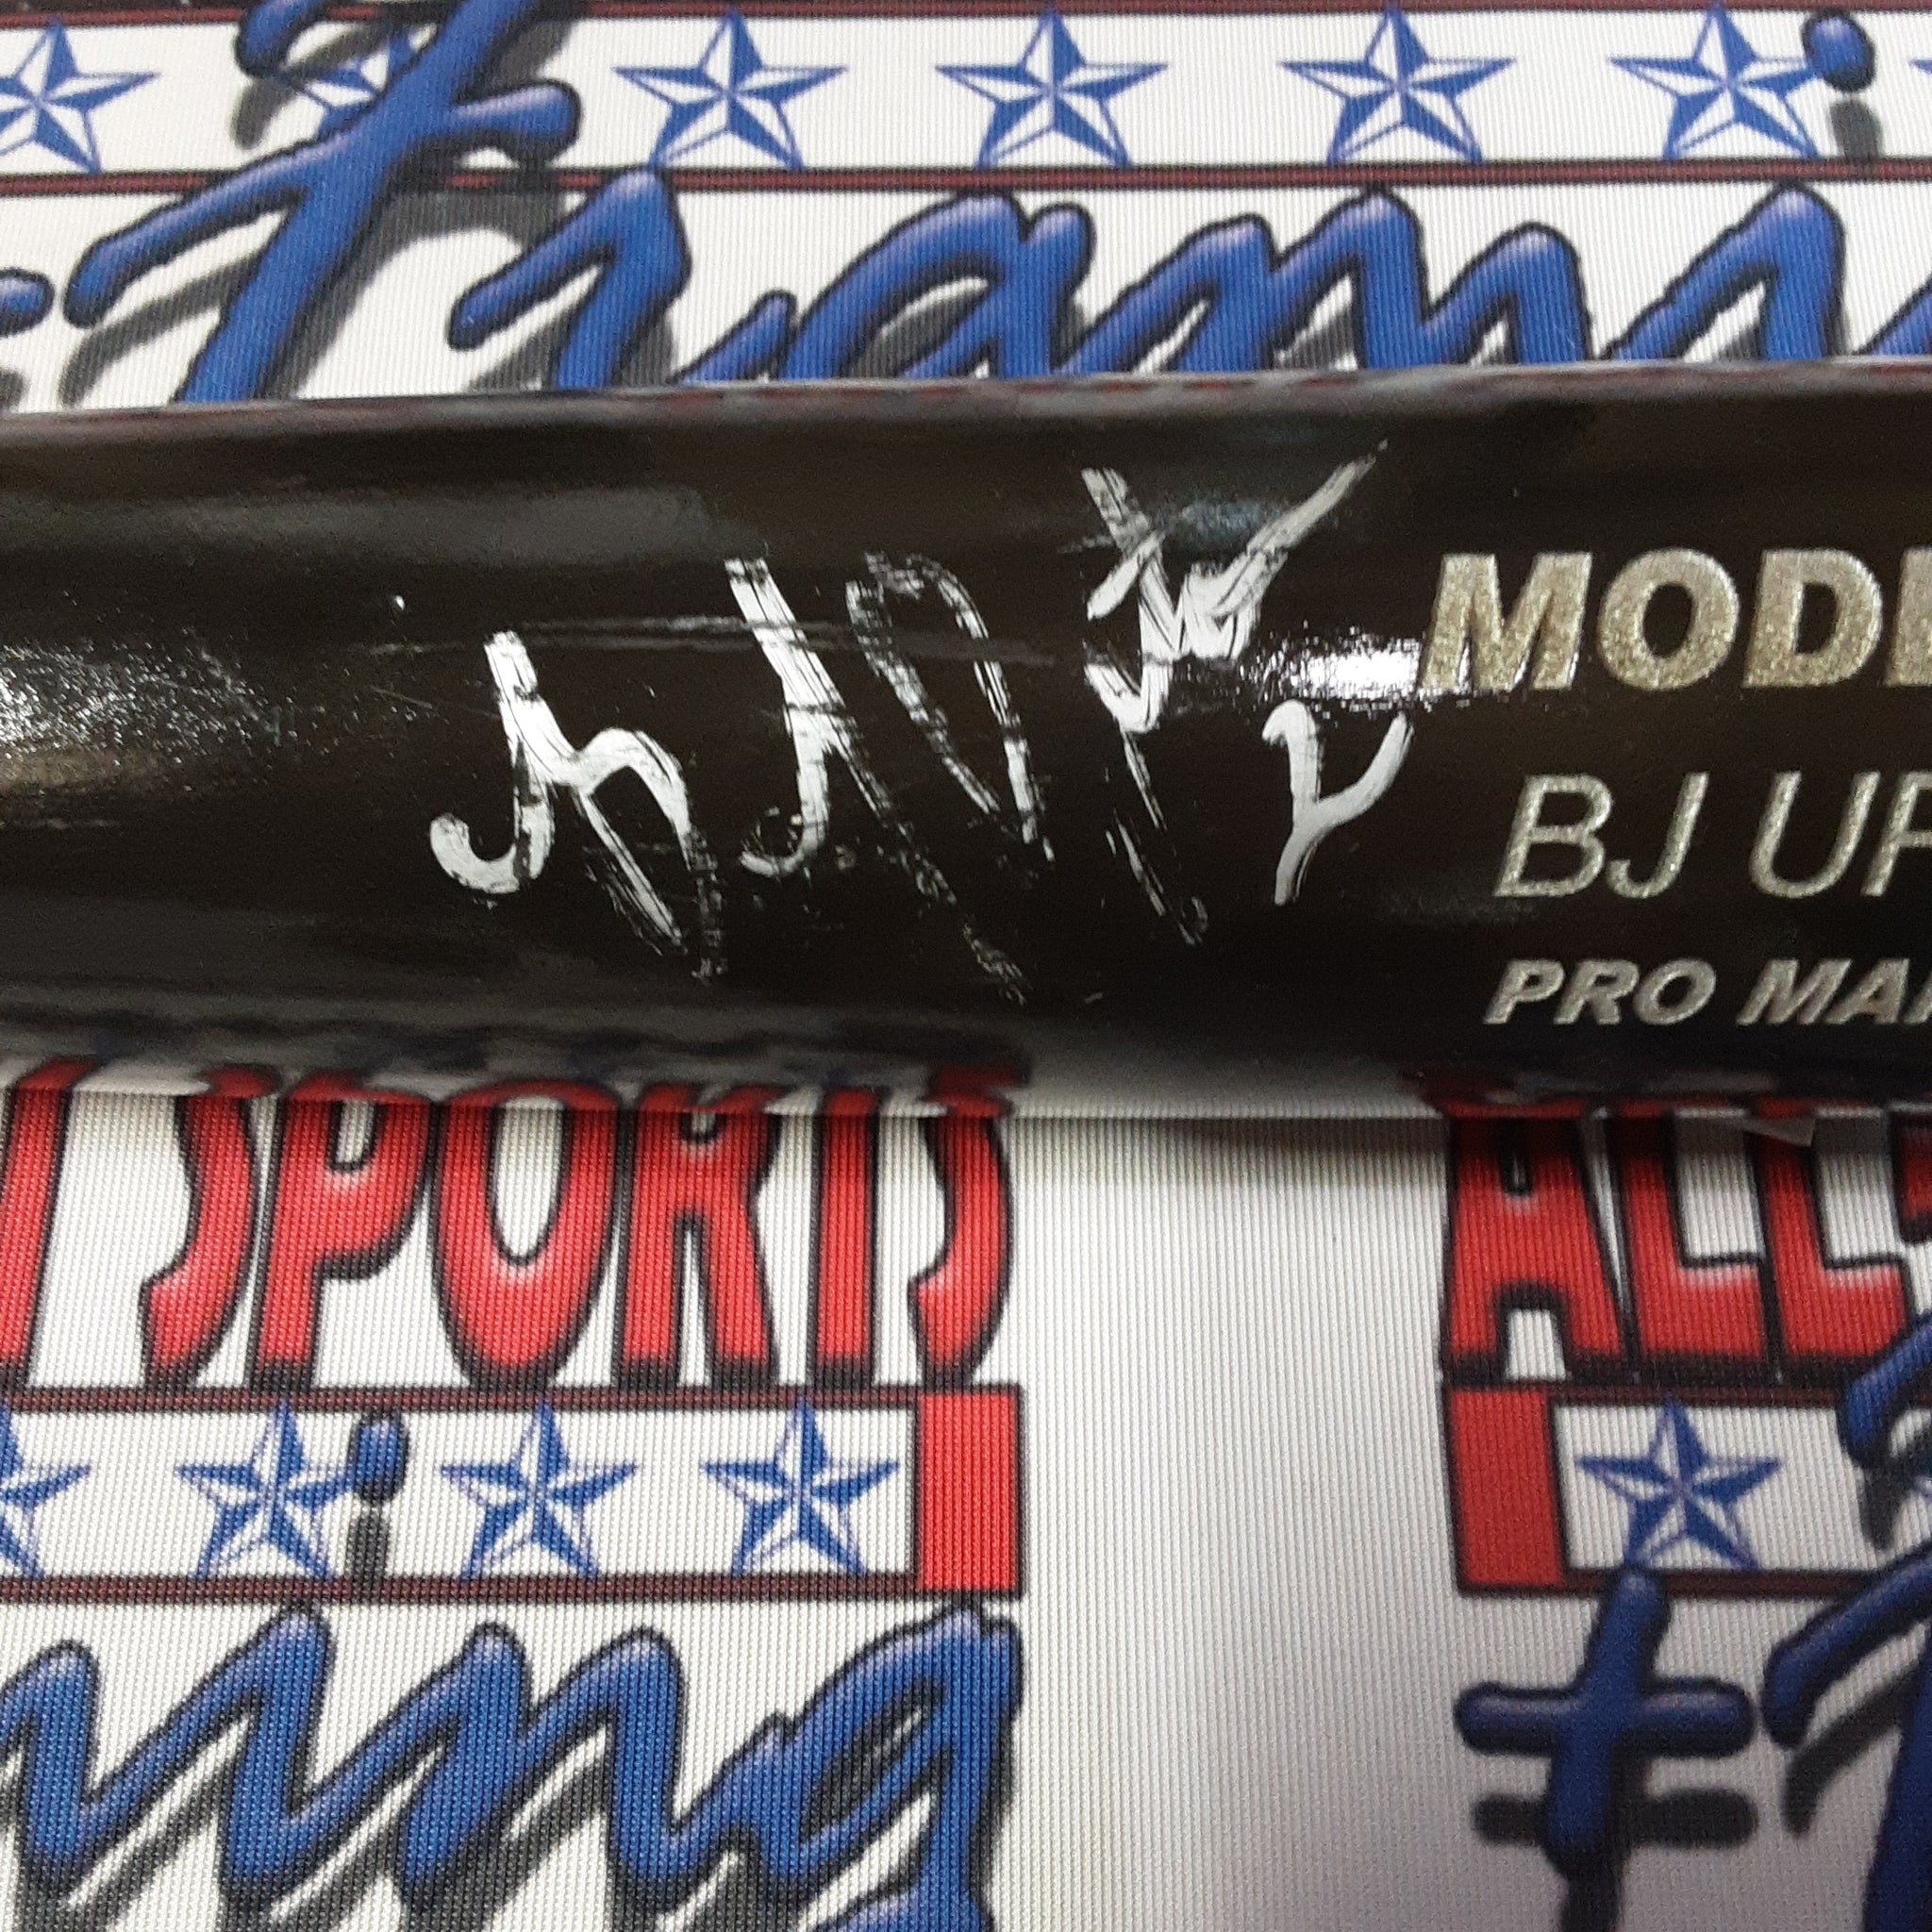 B.J. Upton Authentic Signed Pro Style Bat Autographed JSA.